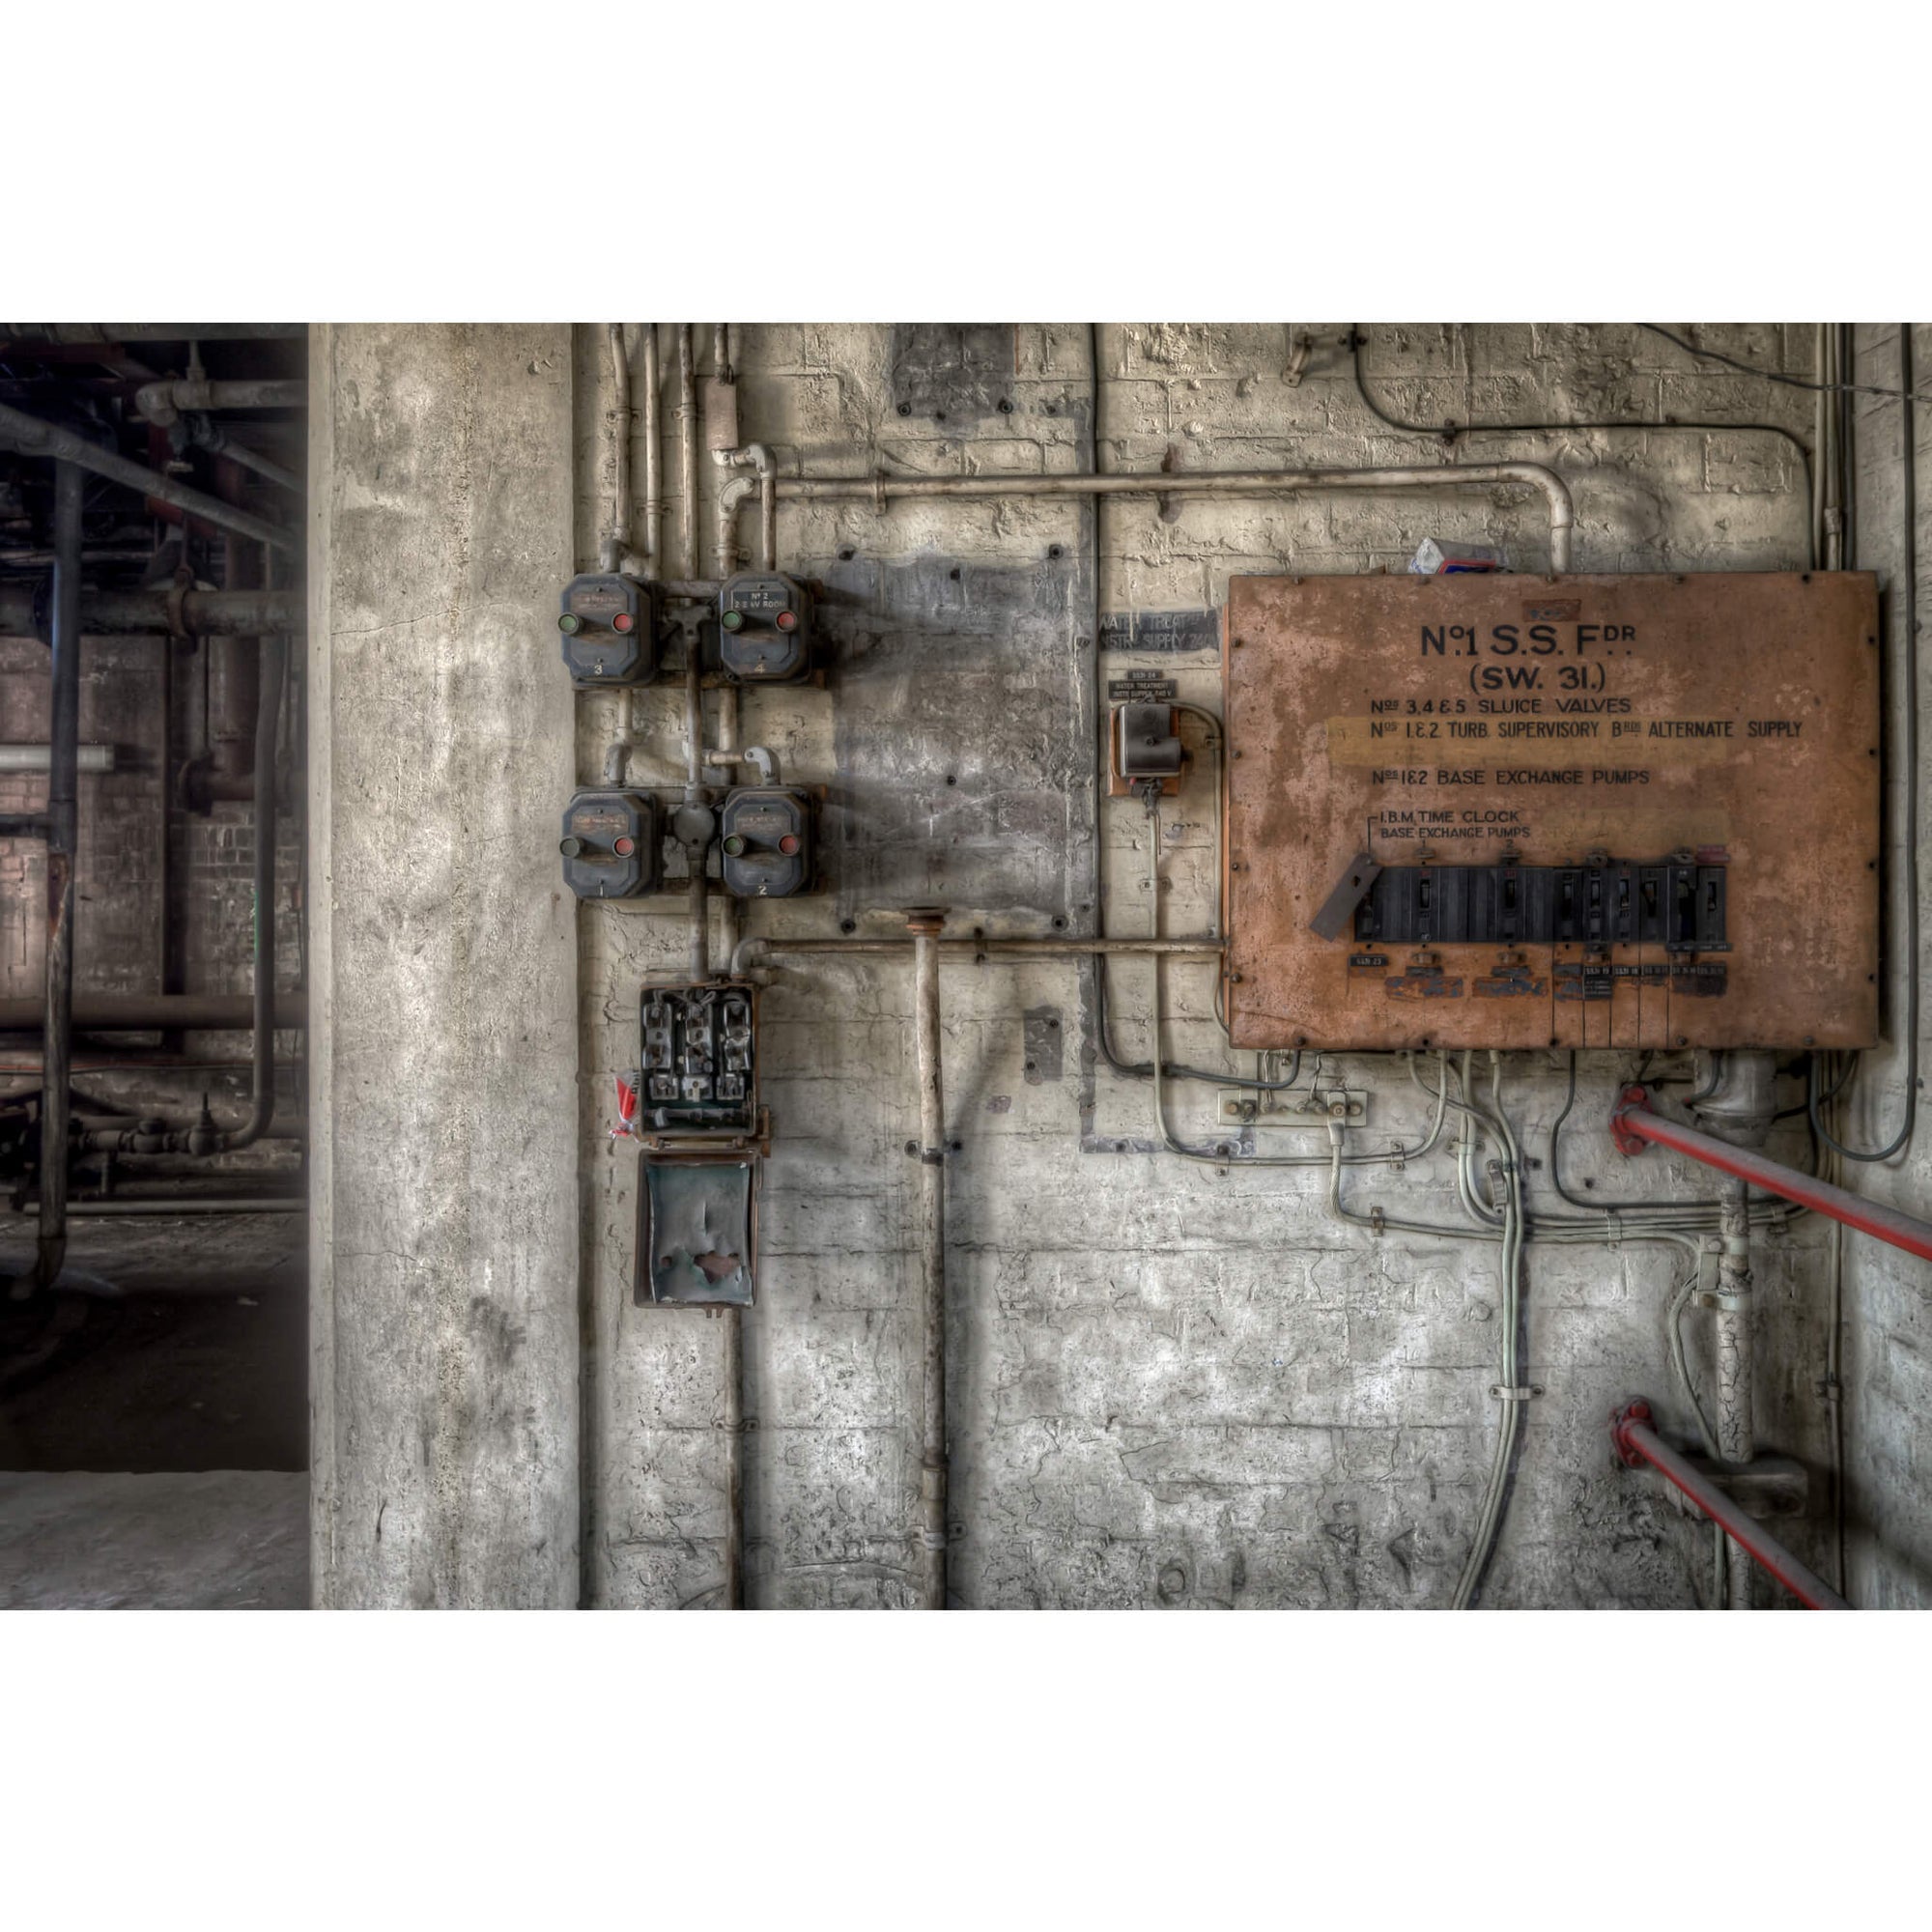 Sluice Valve Control | White Bay Power Station